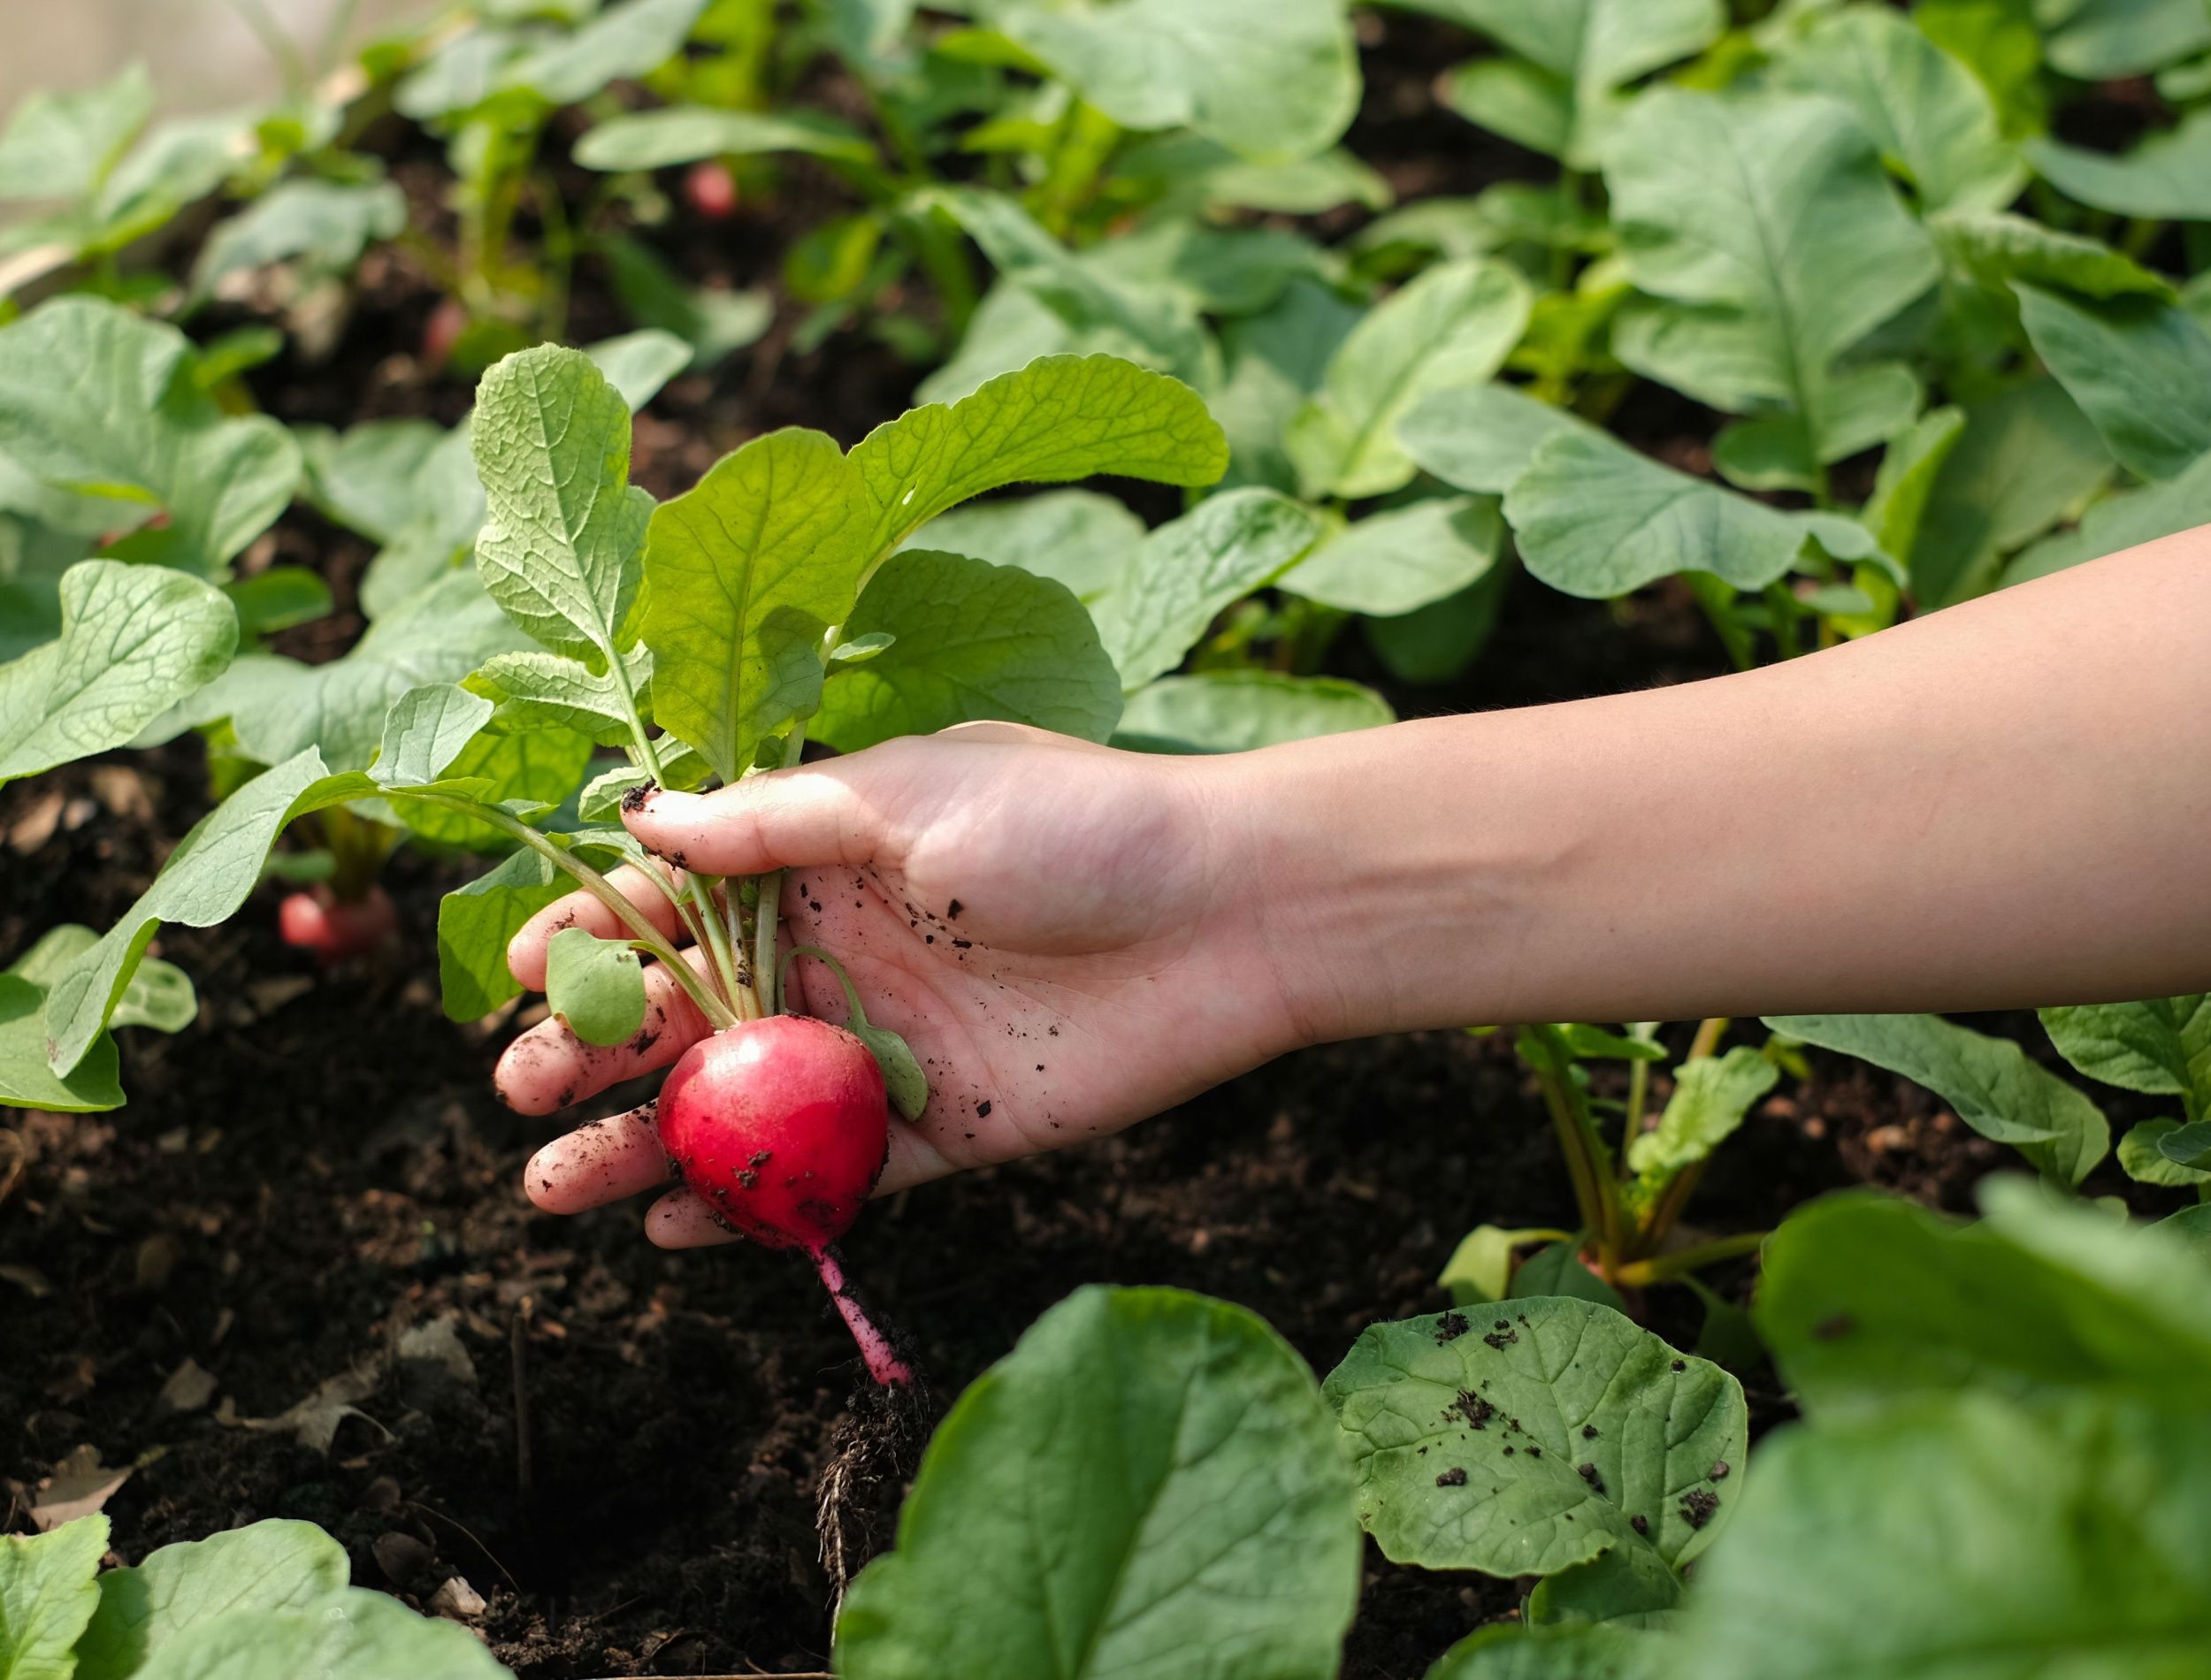 Gardener picking up a fresh red radish in an organic farm